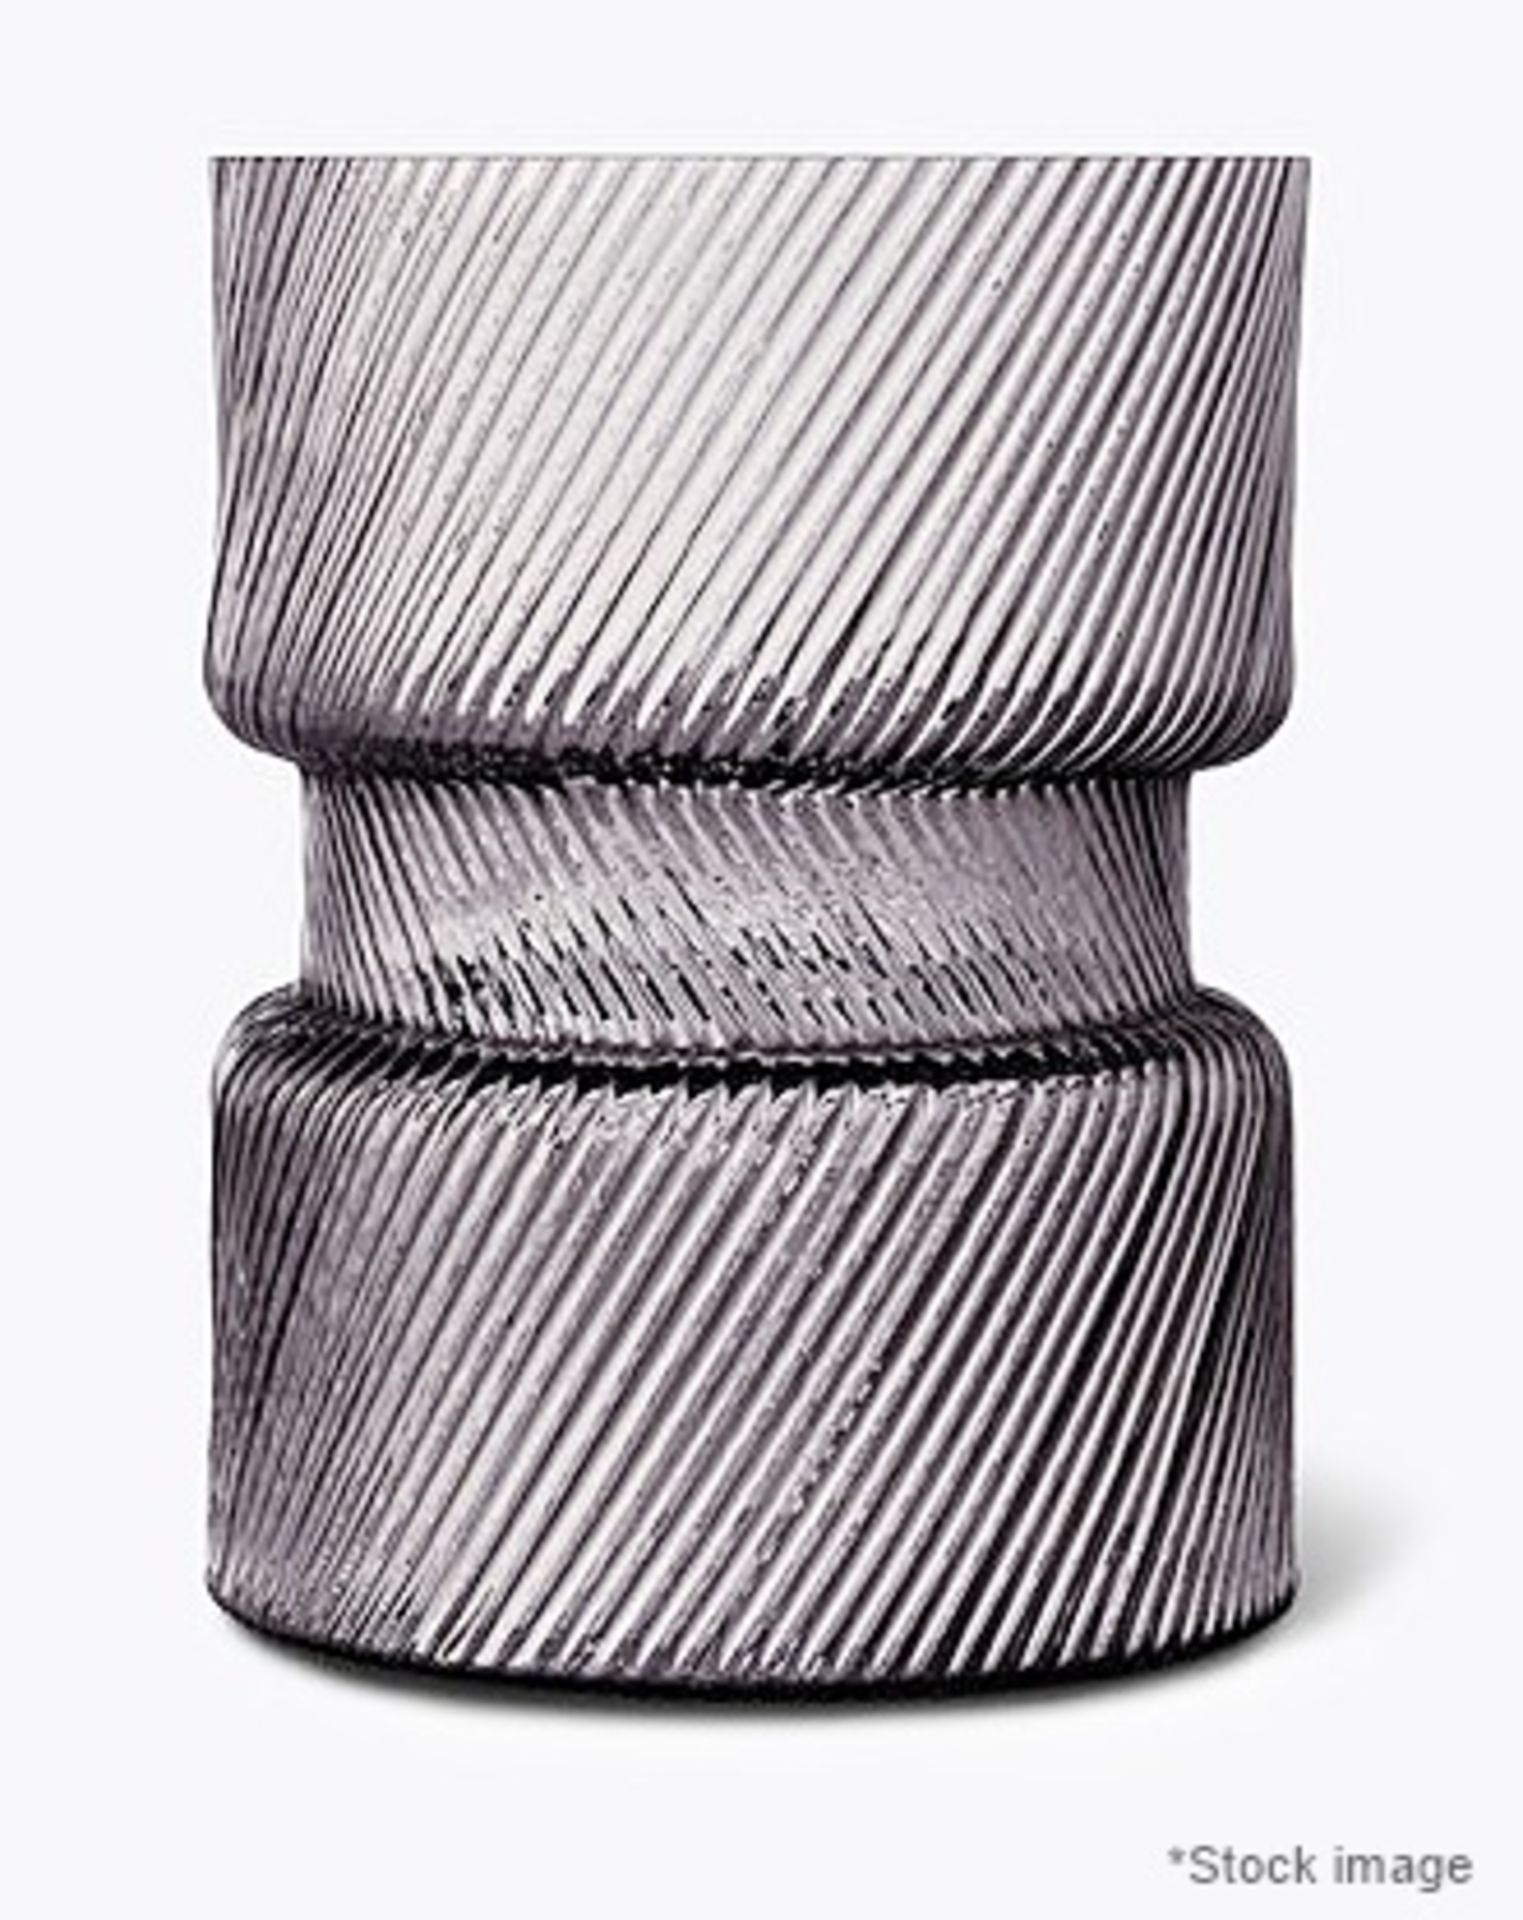 1 x POLTRONA FRAU 'Rips Grande' Large Designer Vase In Transparent-grey Artisan Glass  - RRP £780.00